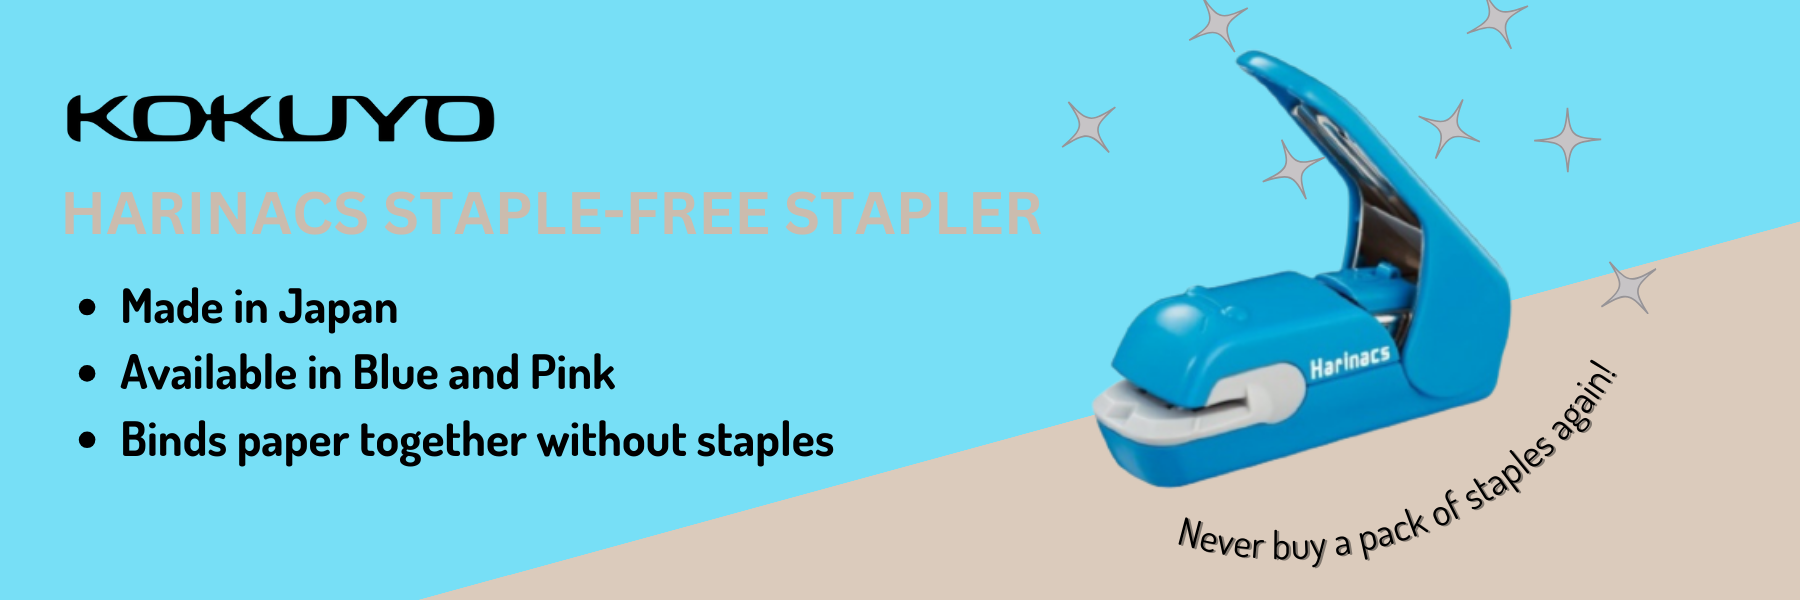 Staple-free Staplers